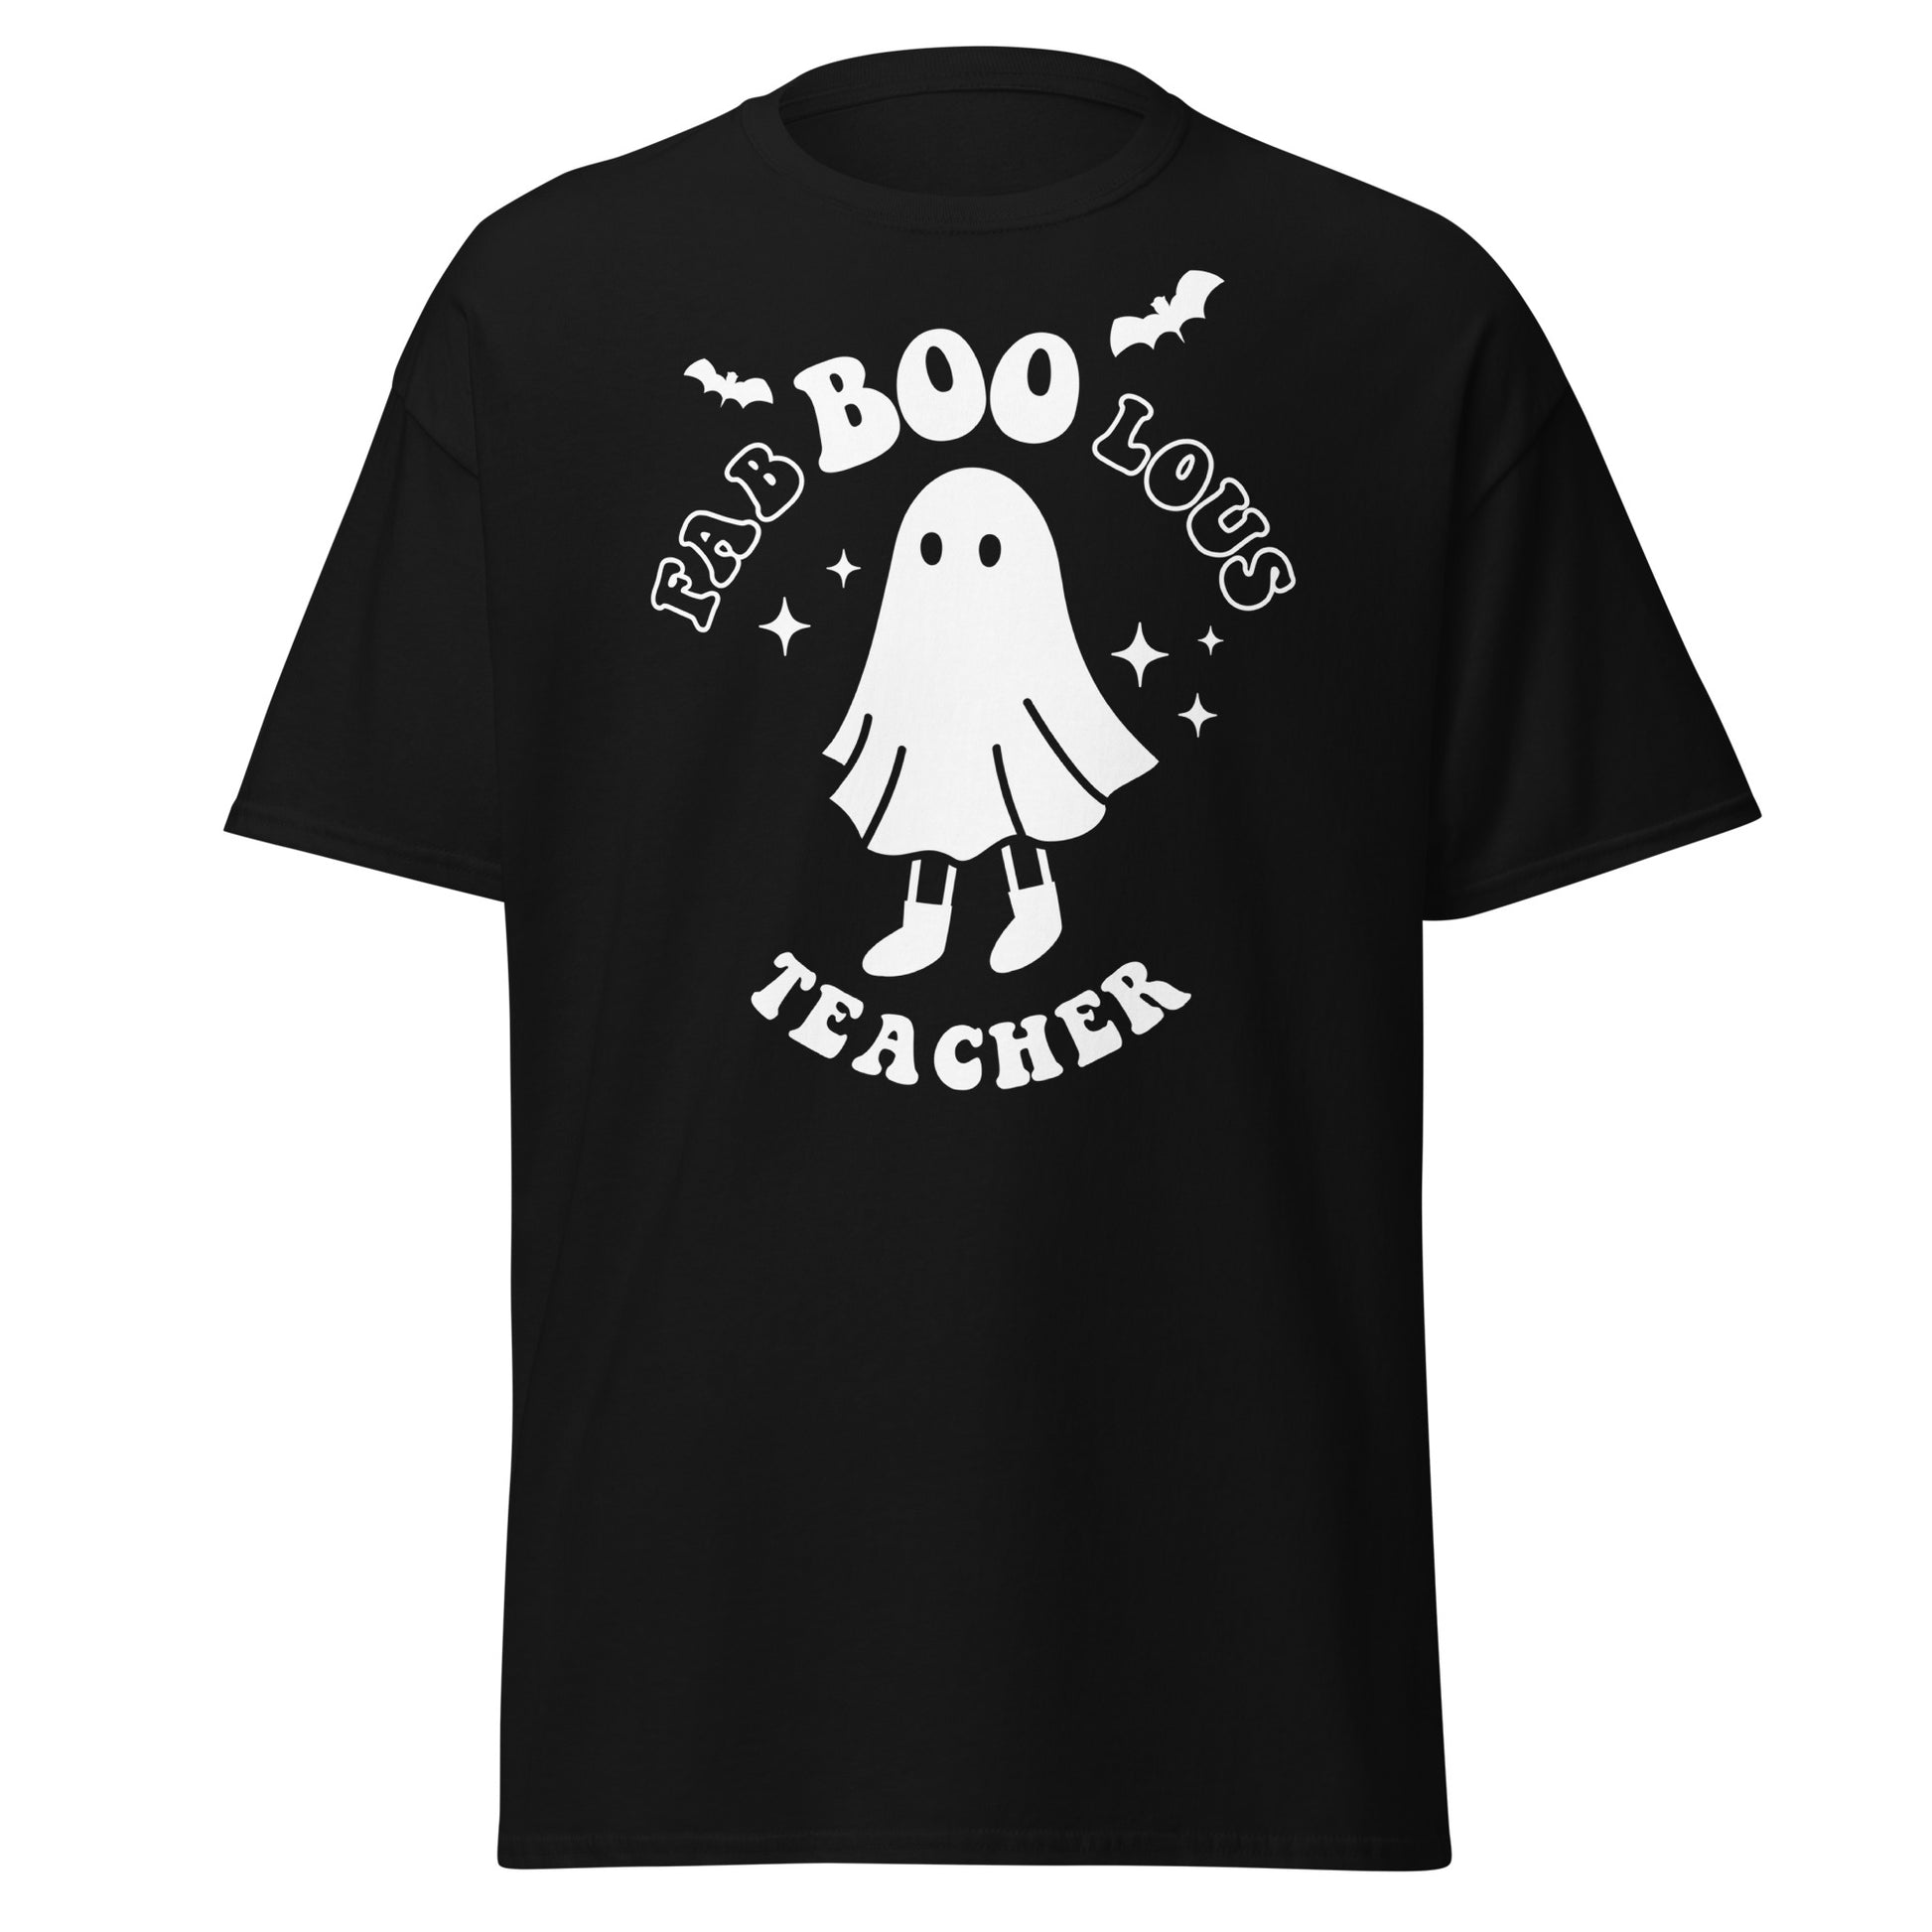 Halloween Vibes with Fab Boo Lous Teacher T-Shirt